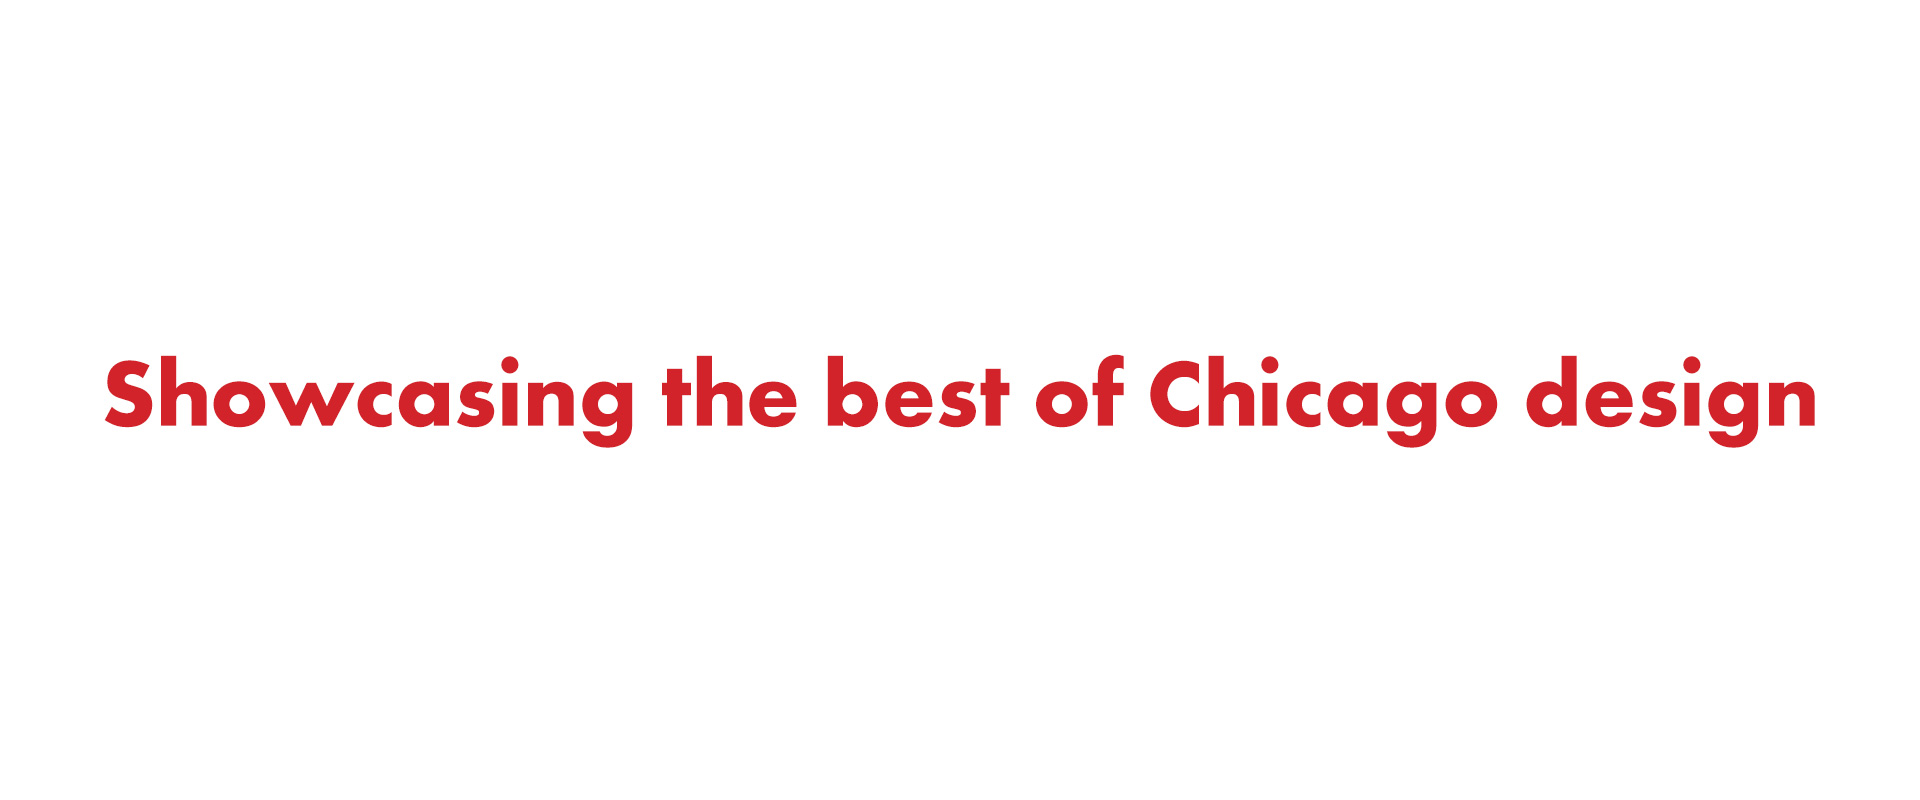 Showcasing the best of Chicago design.